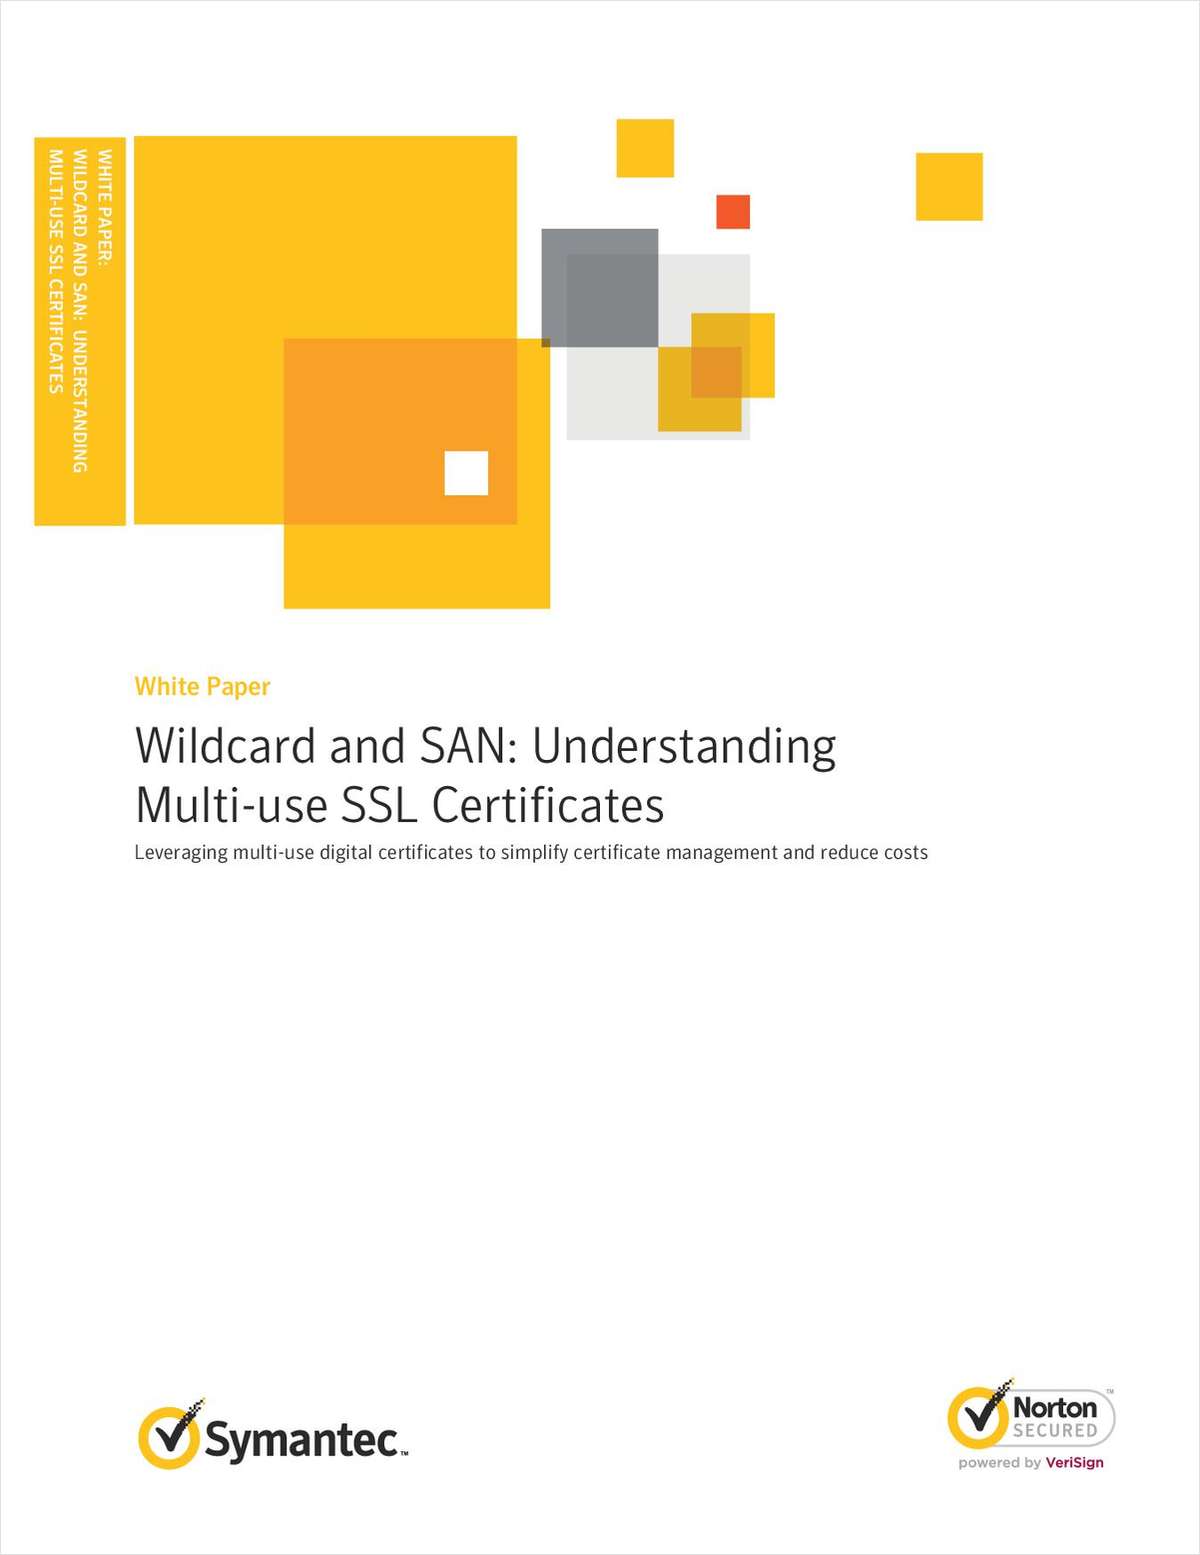 Wildcard and SAN: Understanding Multi-use SSL Certificates